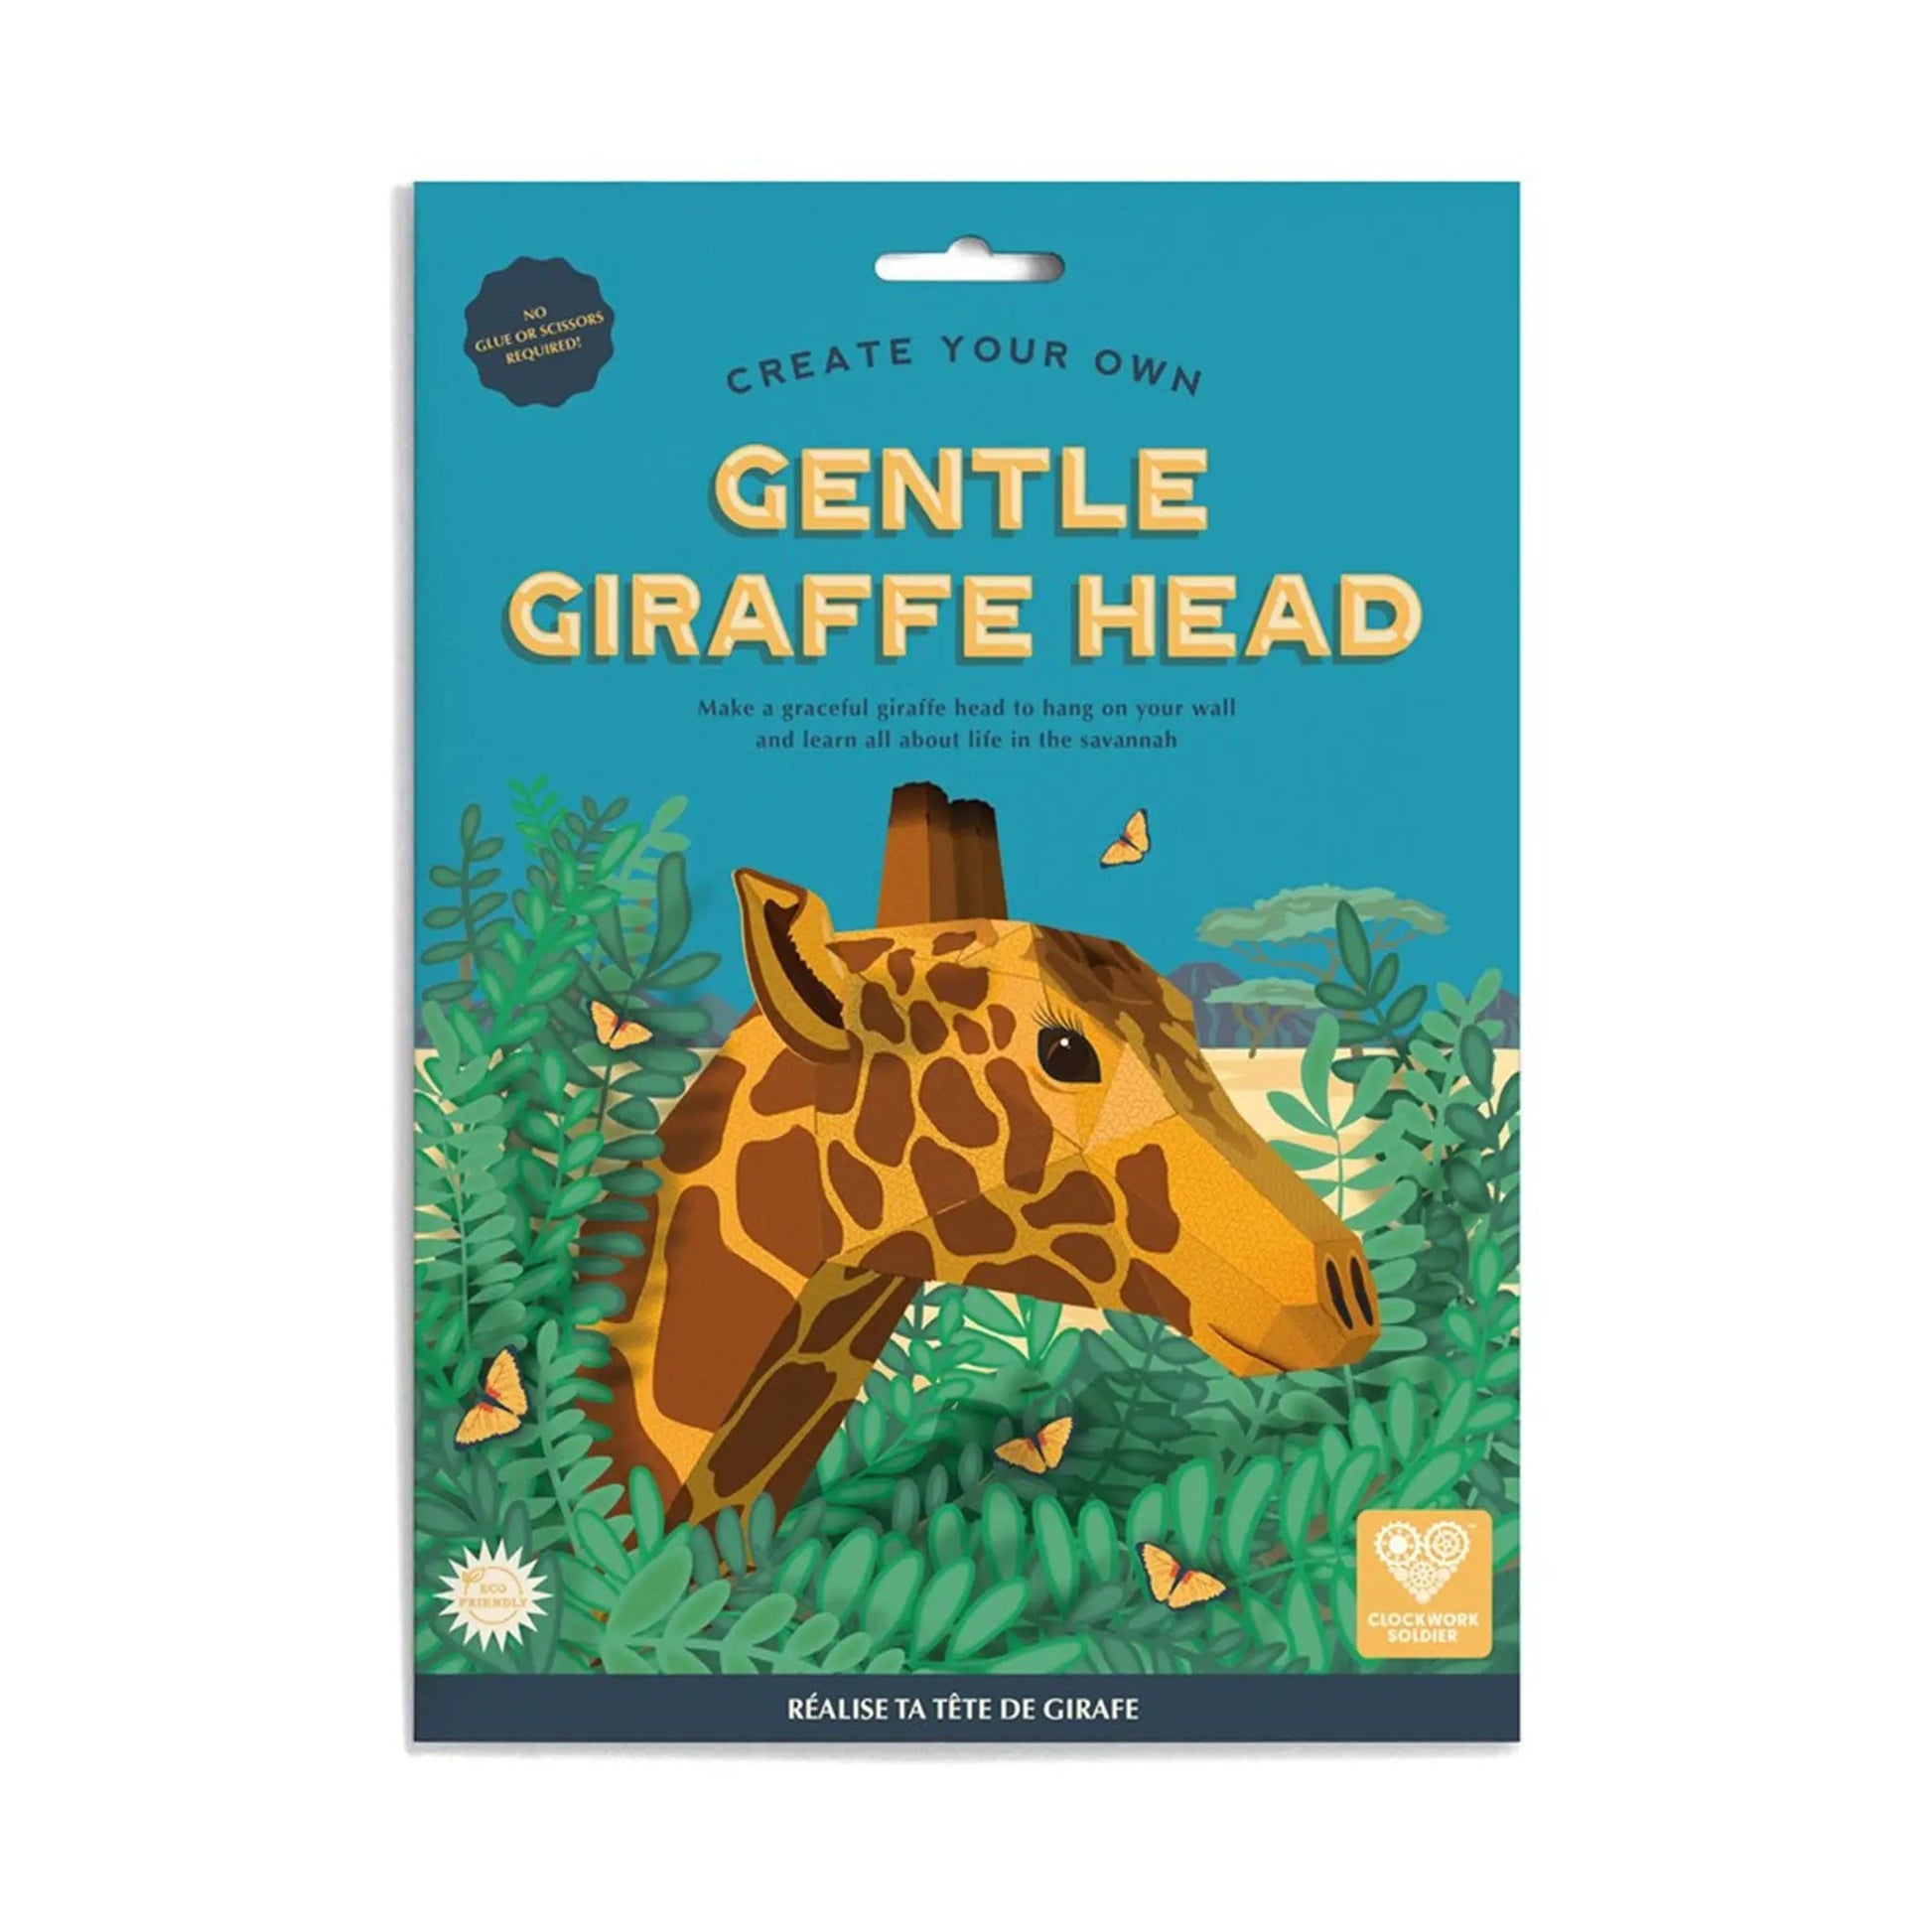 Create Your Own Gentle Giraffe Head - Clockwork Soldier - The Forgotten Toy Shop